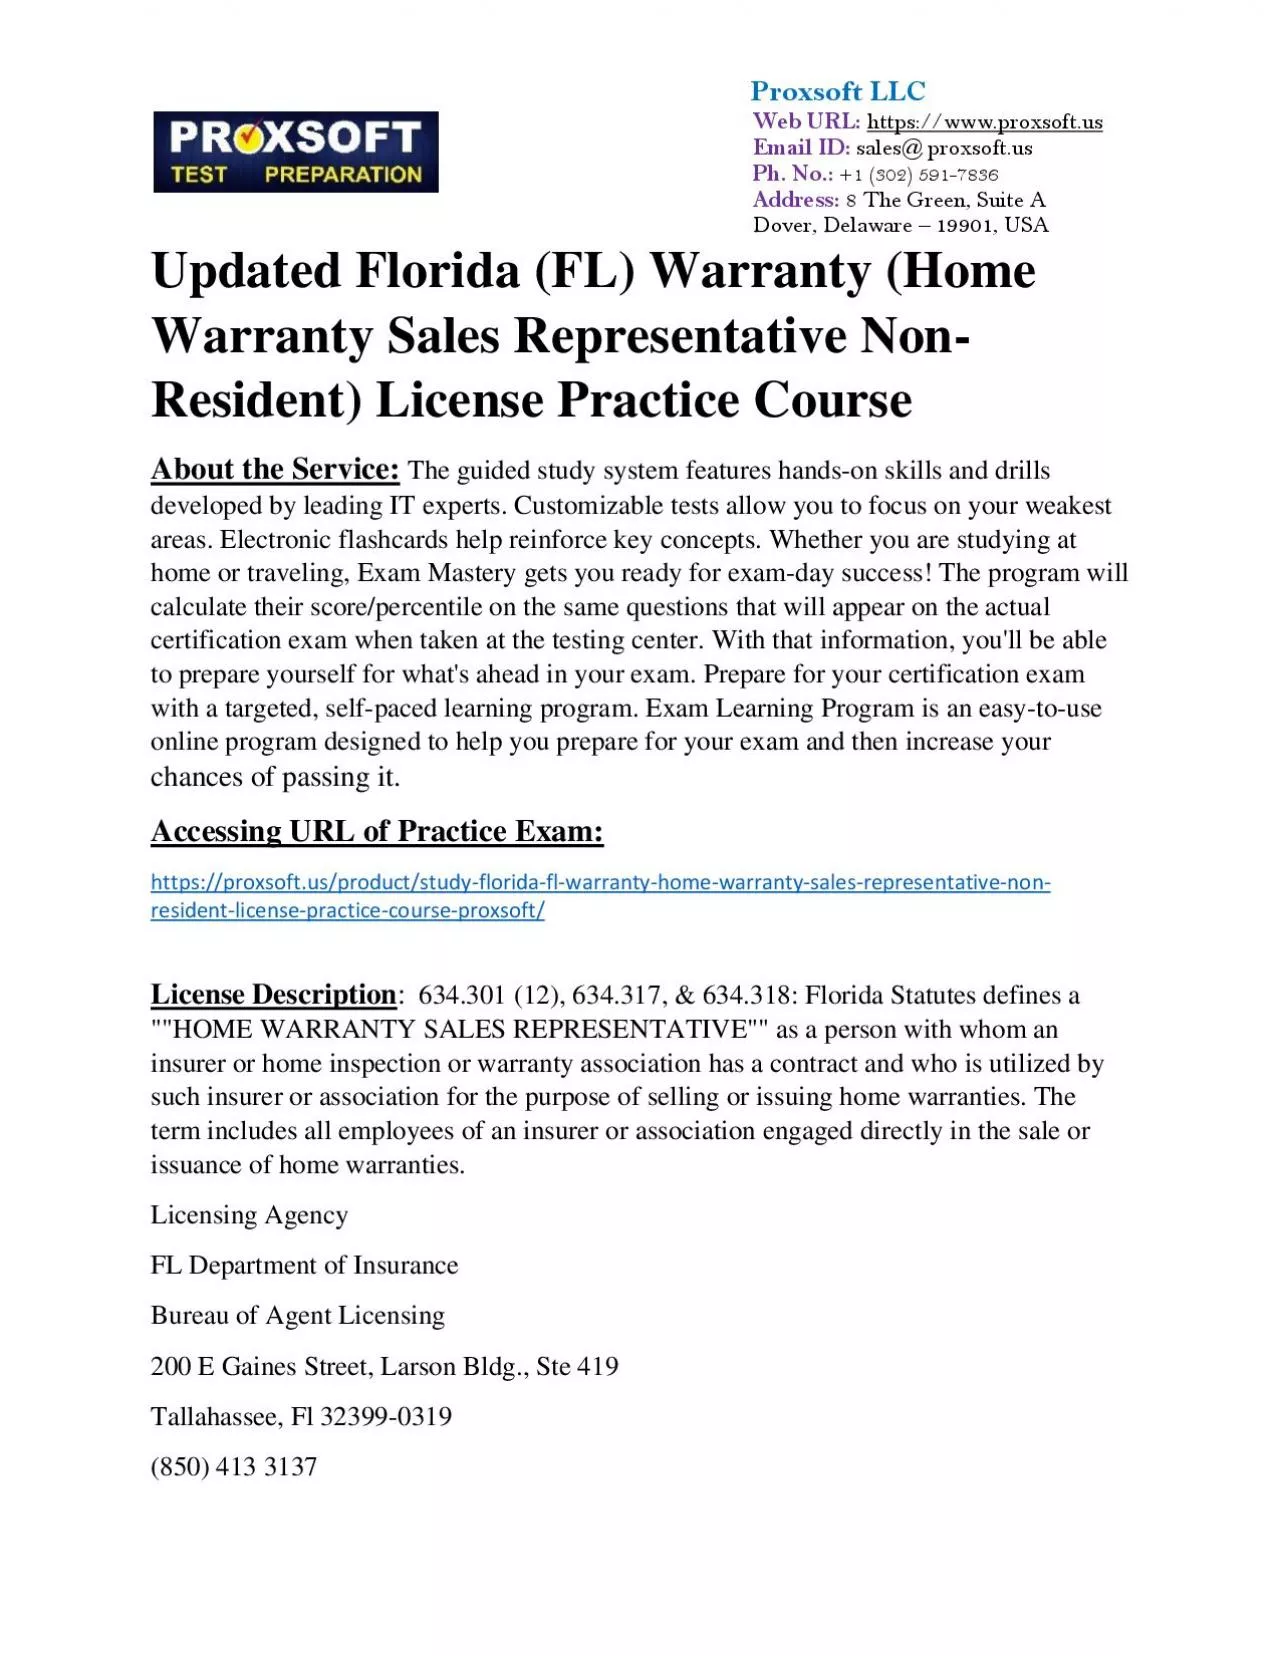 Updated Florida (FL) Warranty (Home Warranty Sales Representative Non-Resident) License